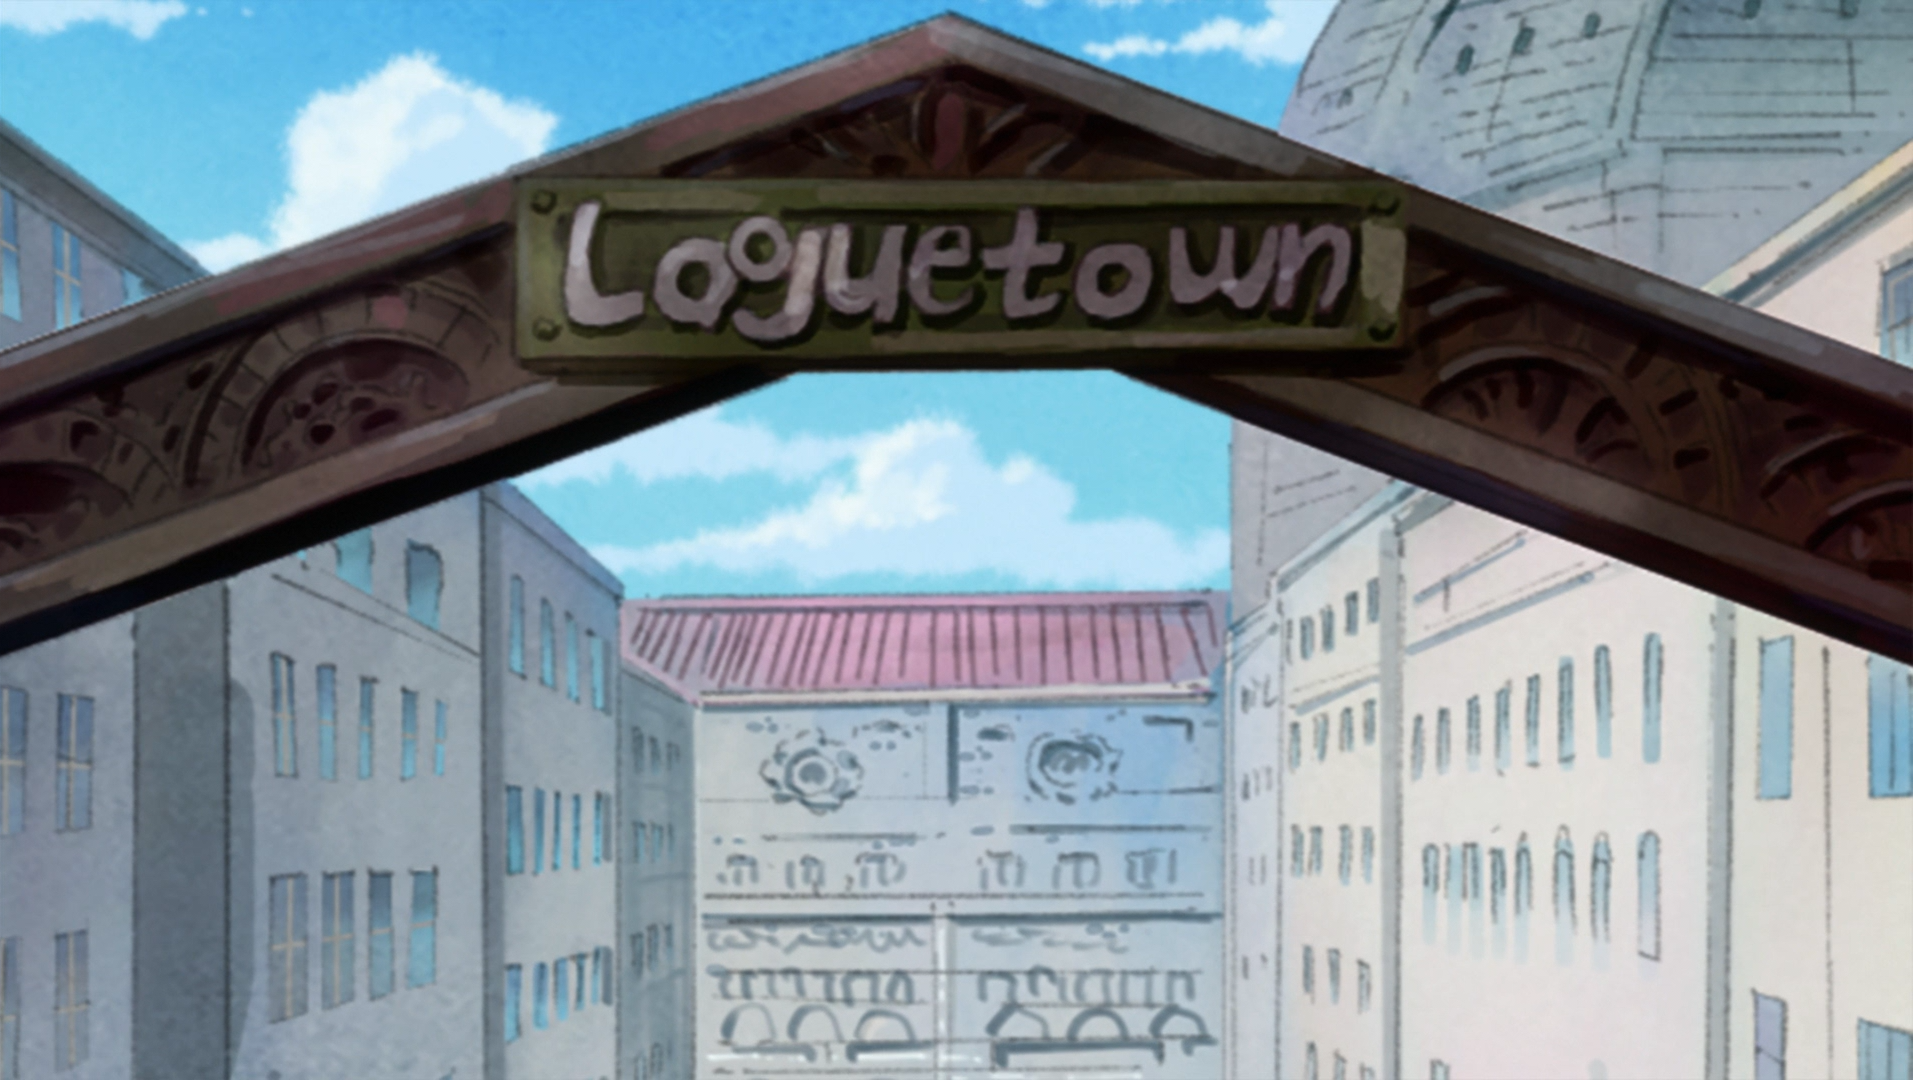 Orange Town, Project: One Piece Wiki